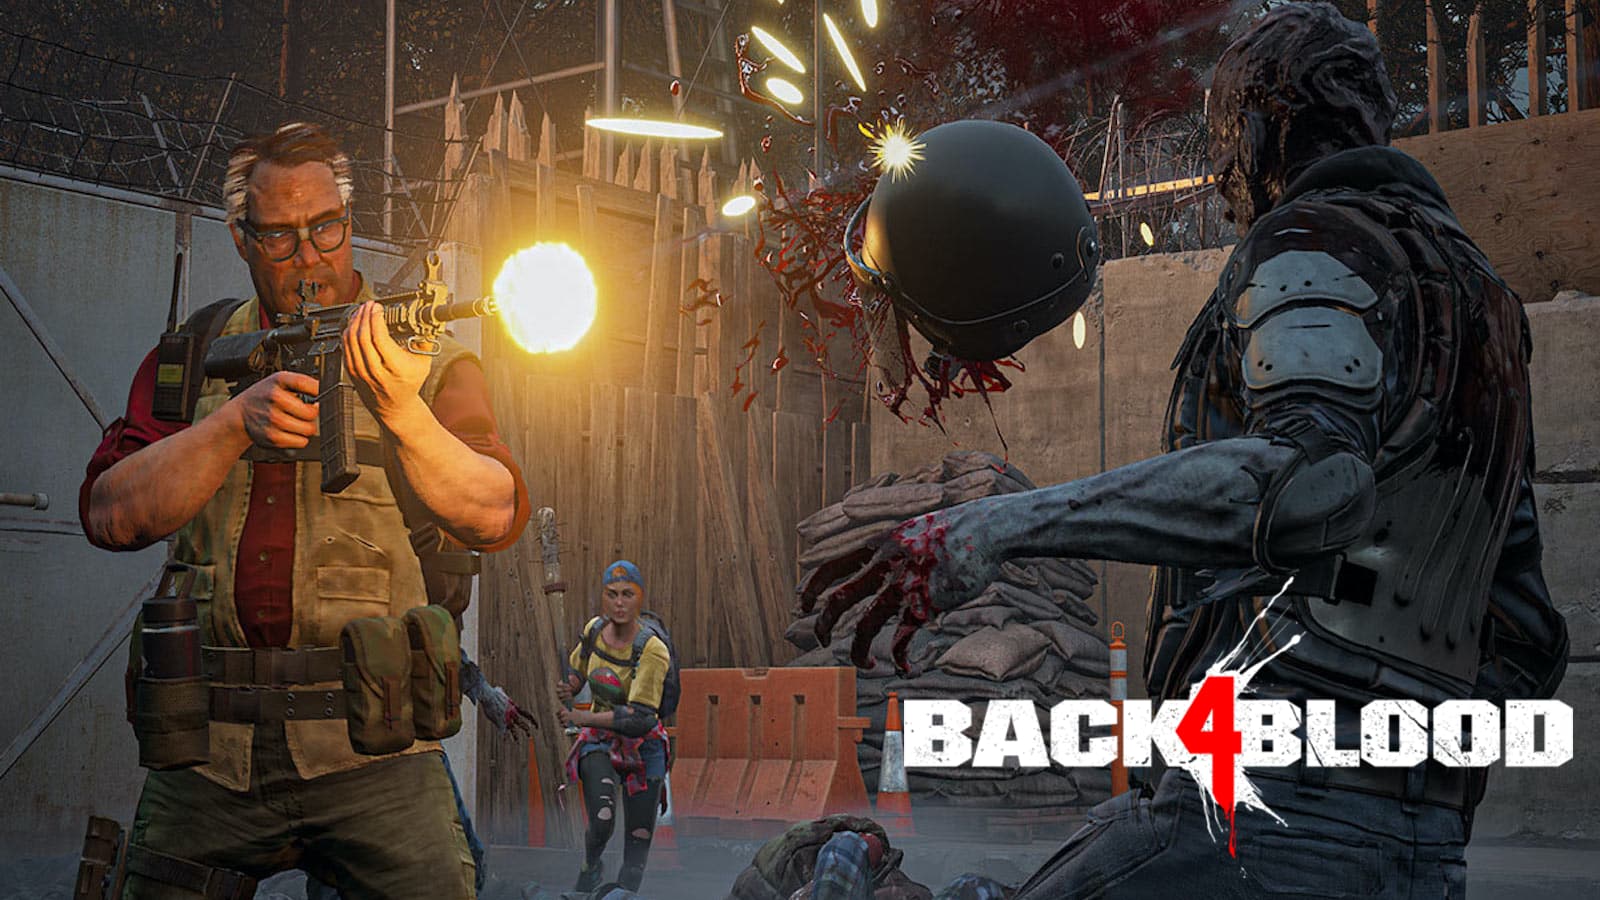 Multiplayer co-op for Back 4 Blood split screen - Ensiplay